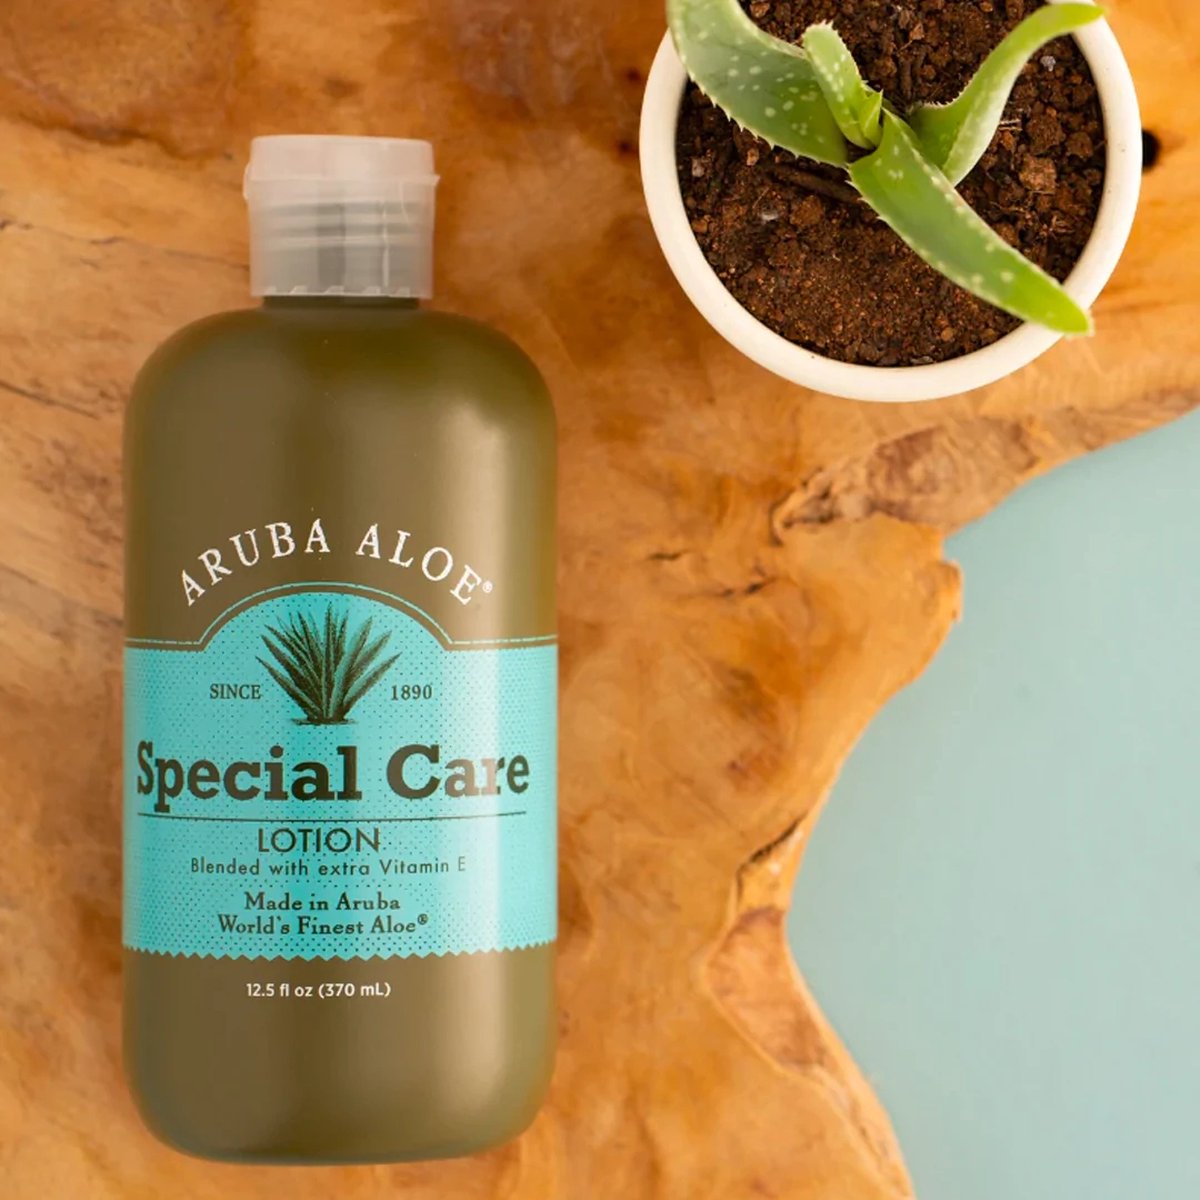 Aruba Aloe Special Care Lotion